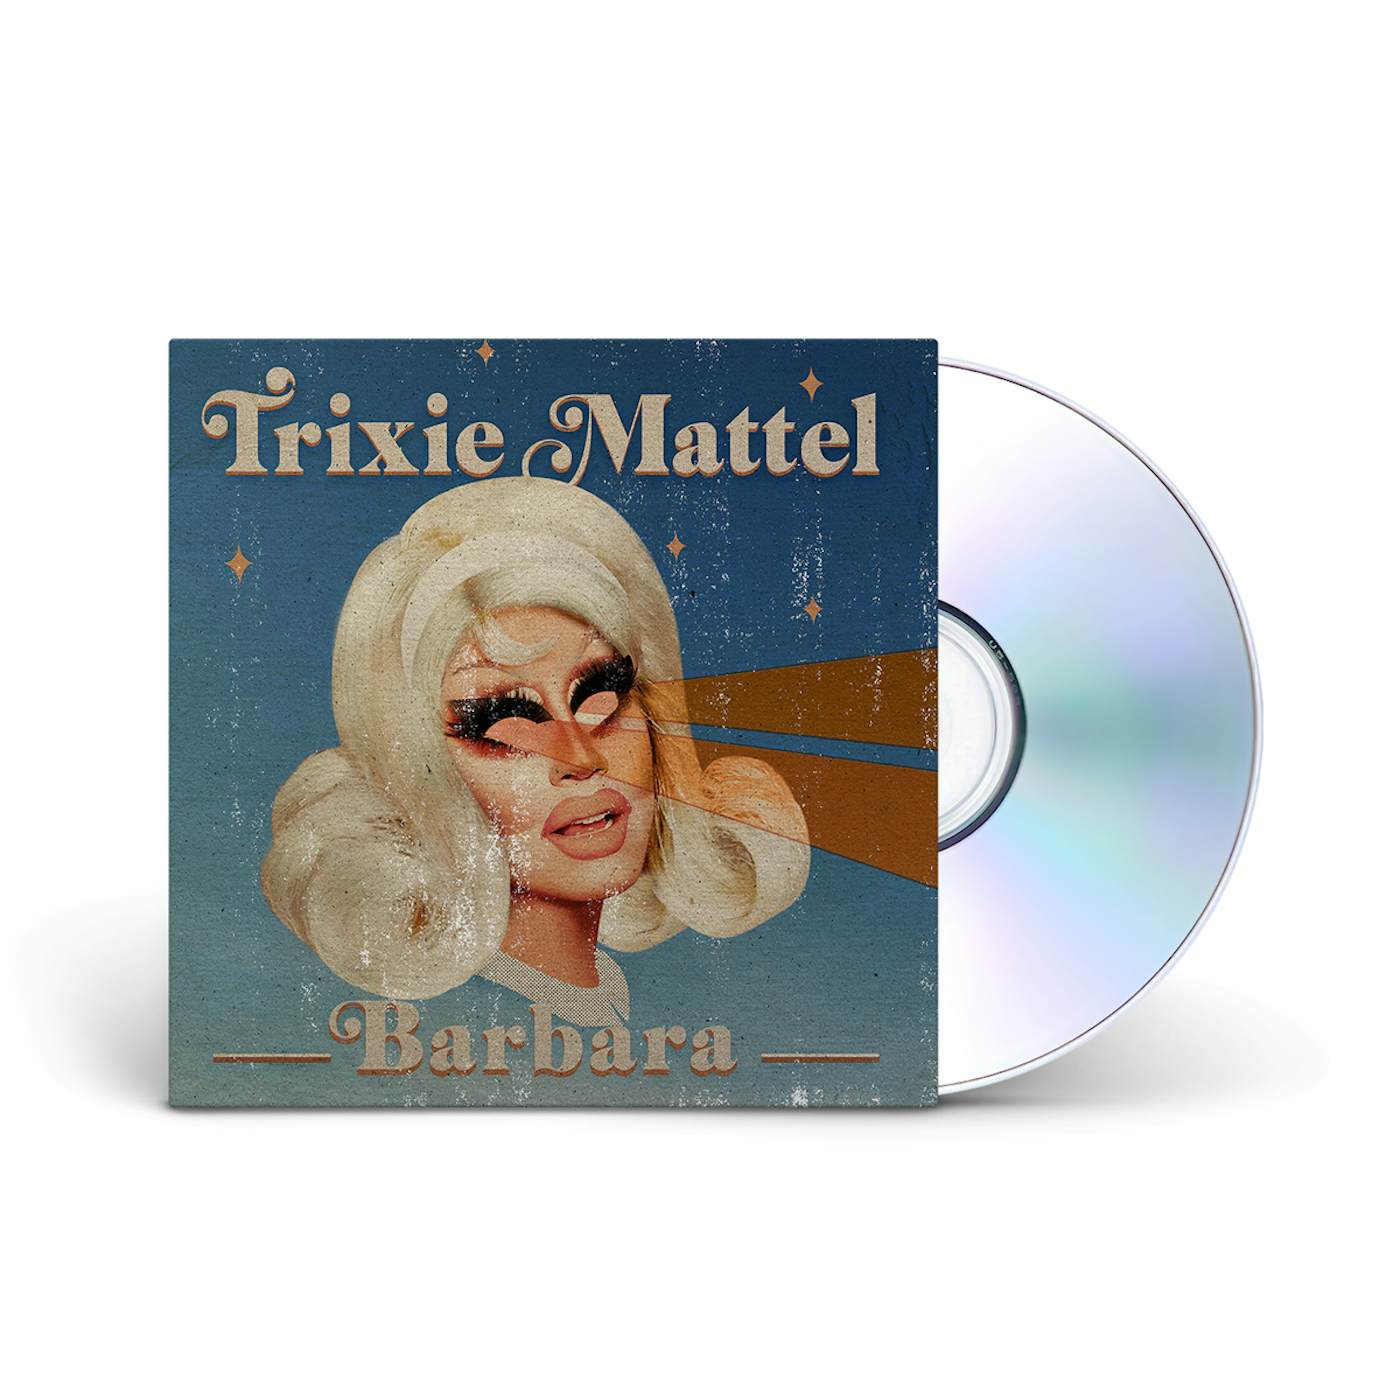 Trixie Mattel - “Barbara” CD